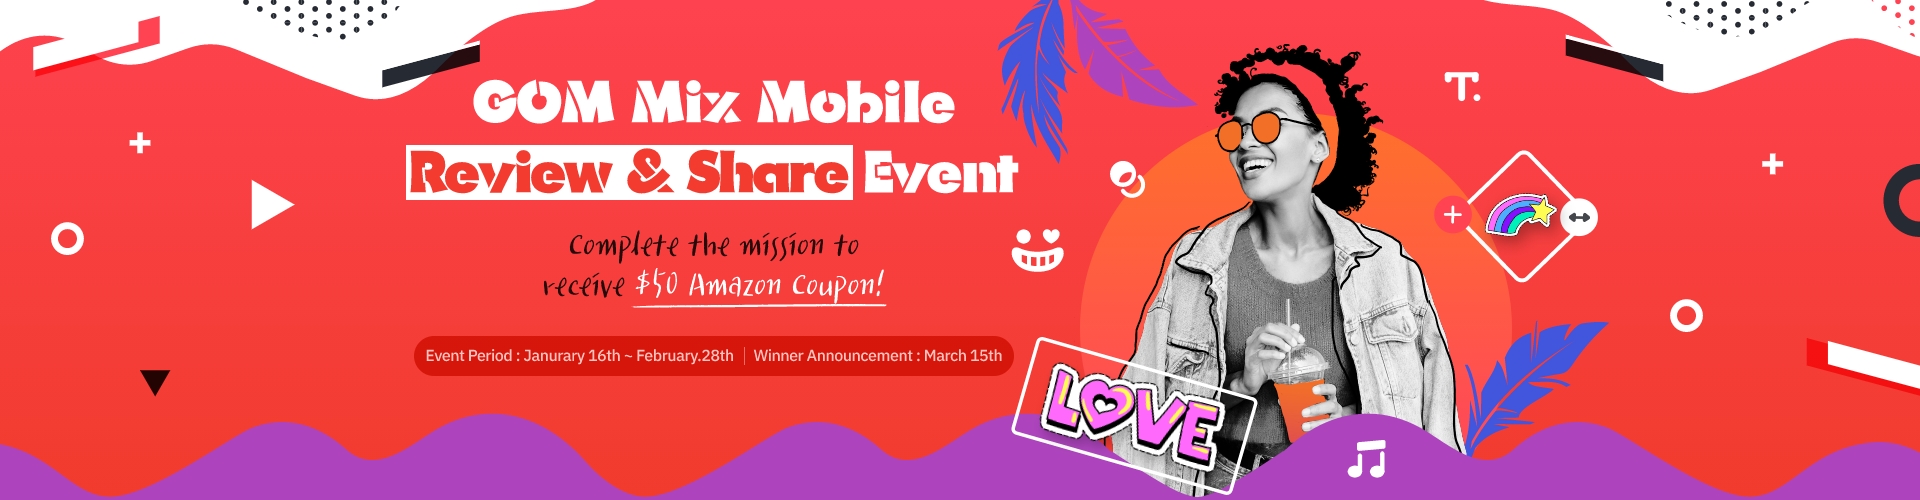 GOM Mix Mobile Review+Social Media Event Visual Image